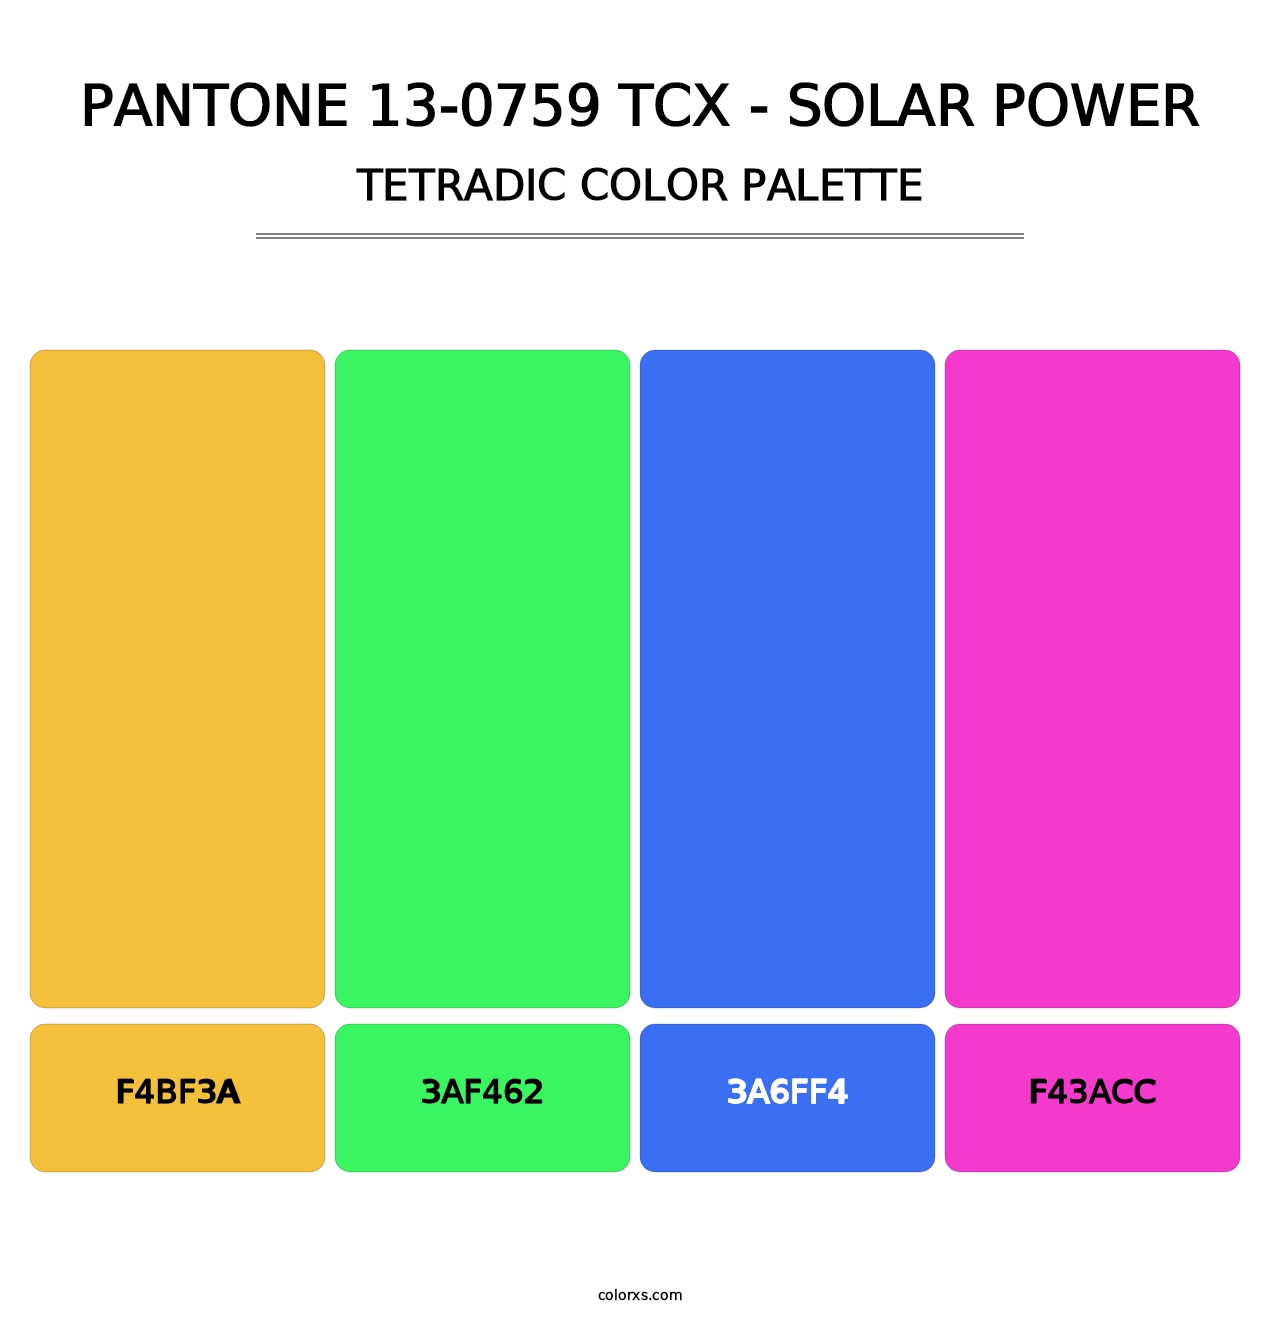 PANTONE 13-0759 TCX - Solar Power - Tetradic Color Palette